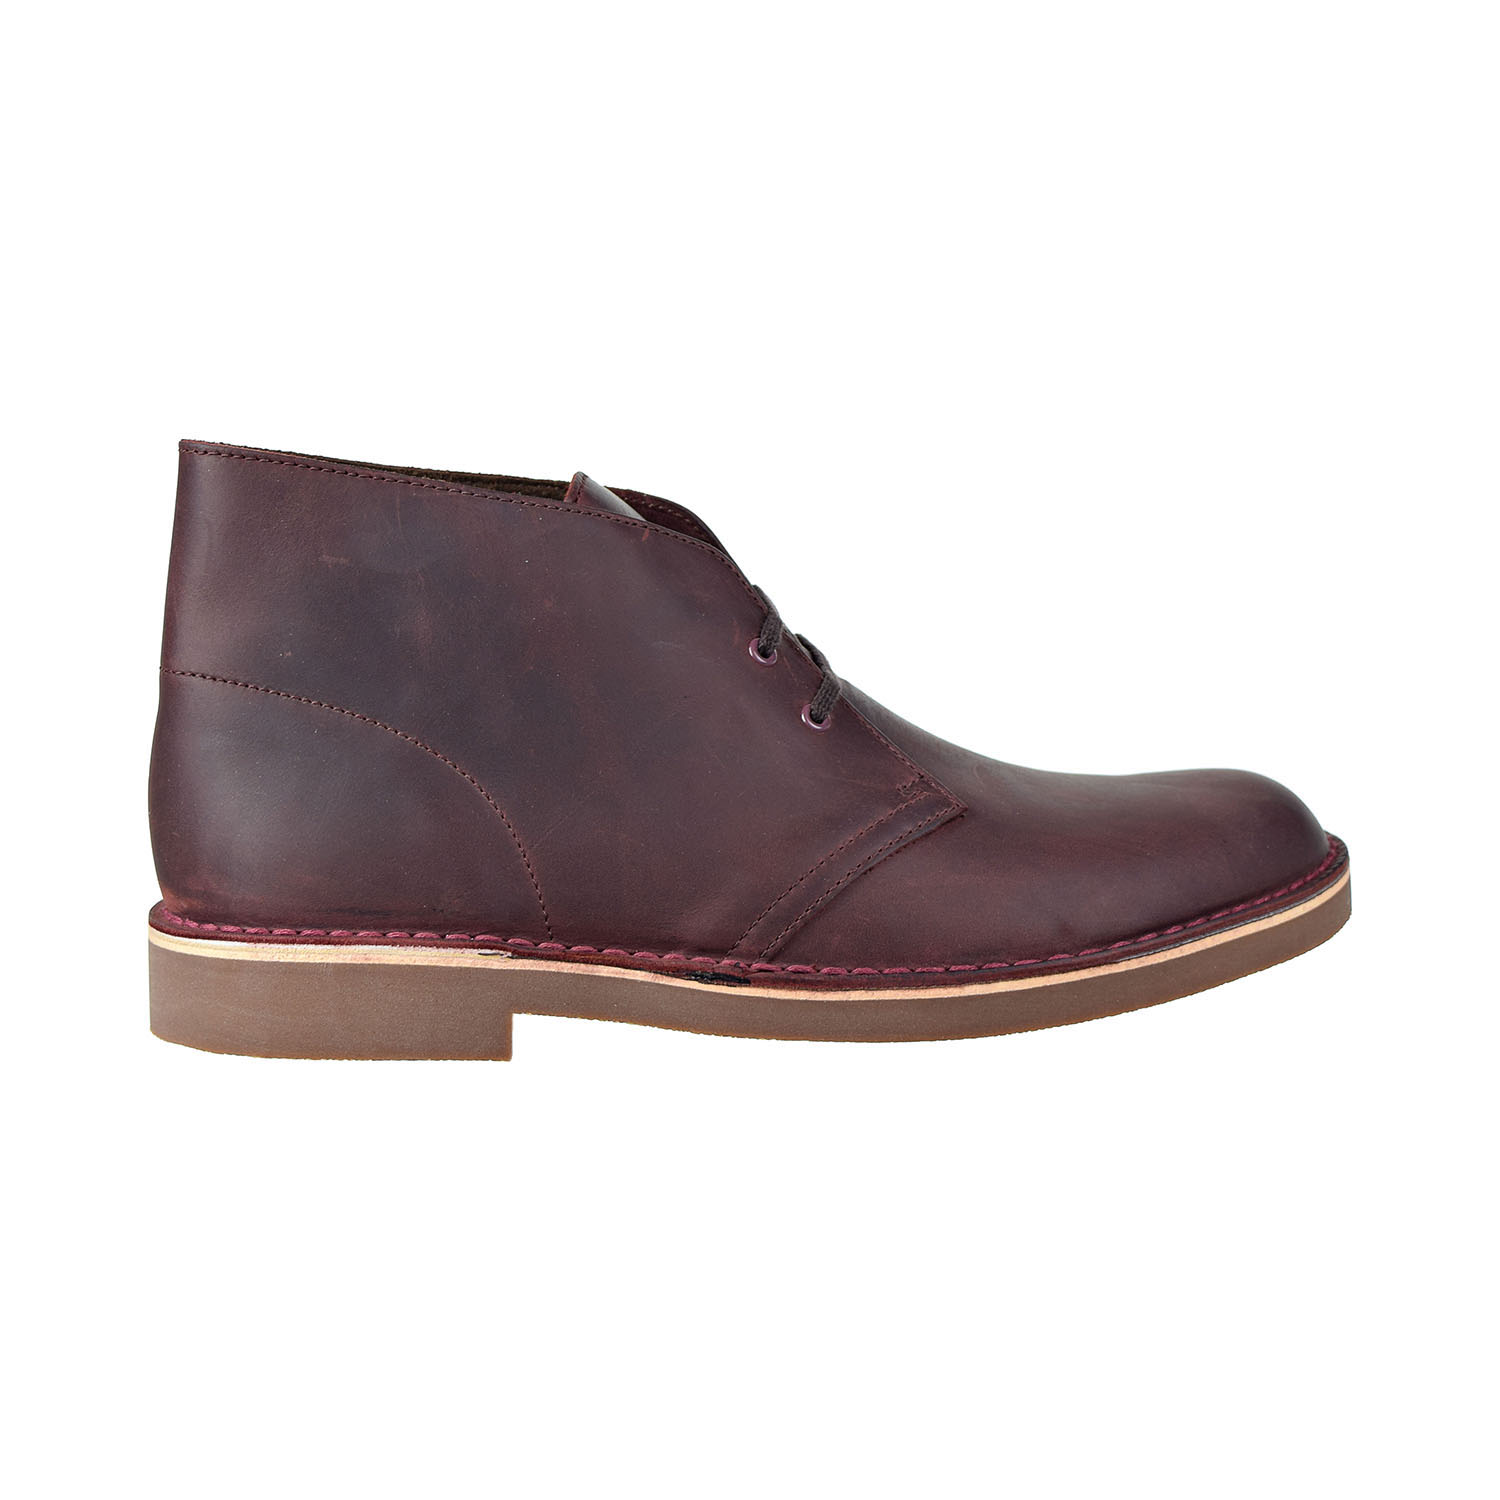 Clarks Bushacre 2 Men's Shoes Wine Leather 26138383 | eBay